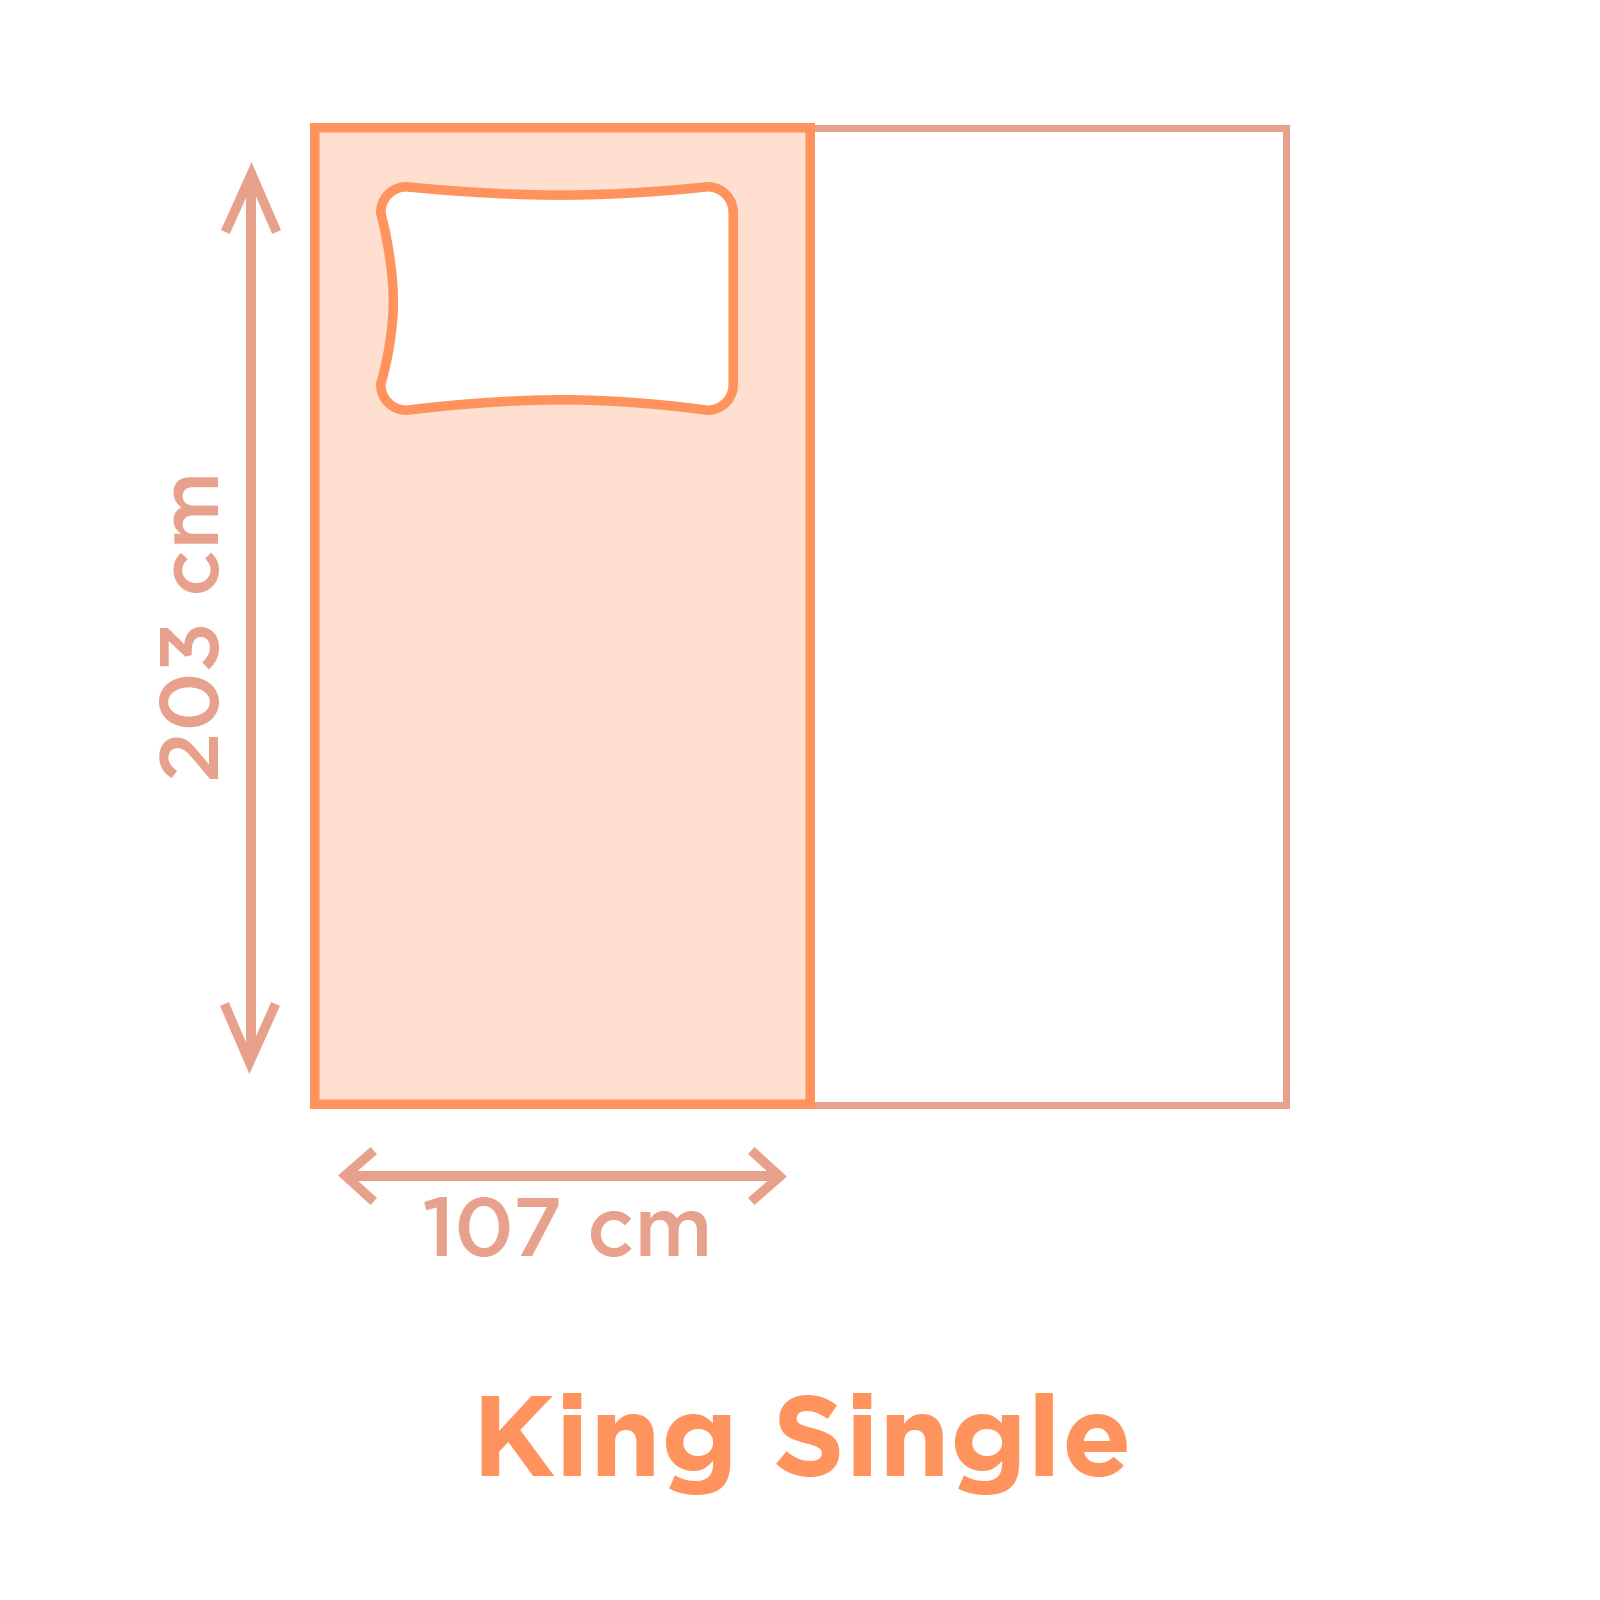 King Single Mattress Size & Dimensions in Australia